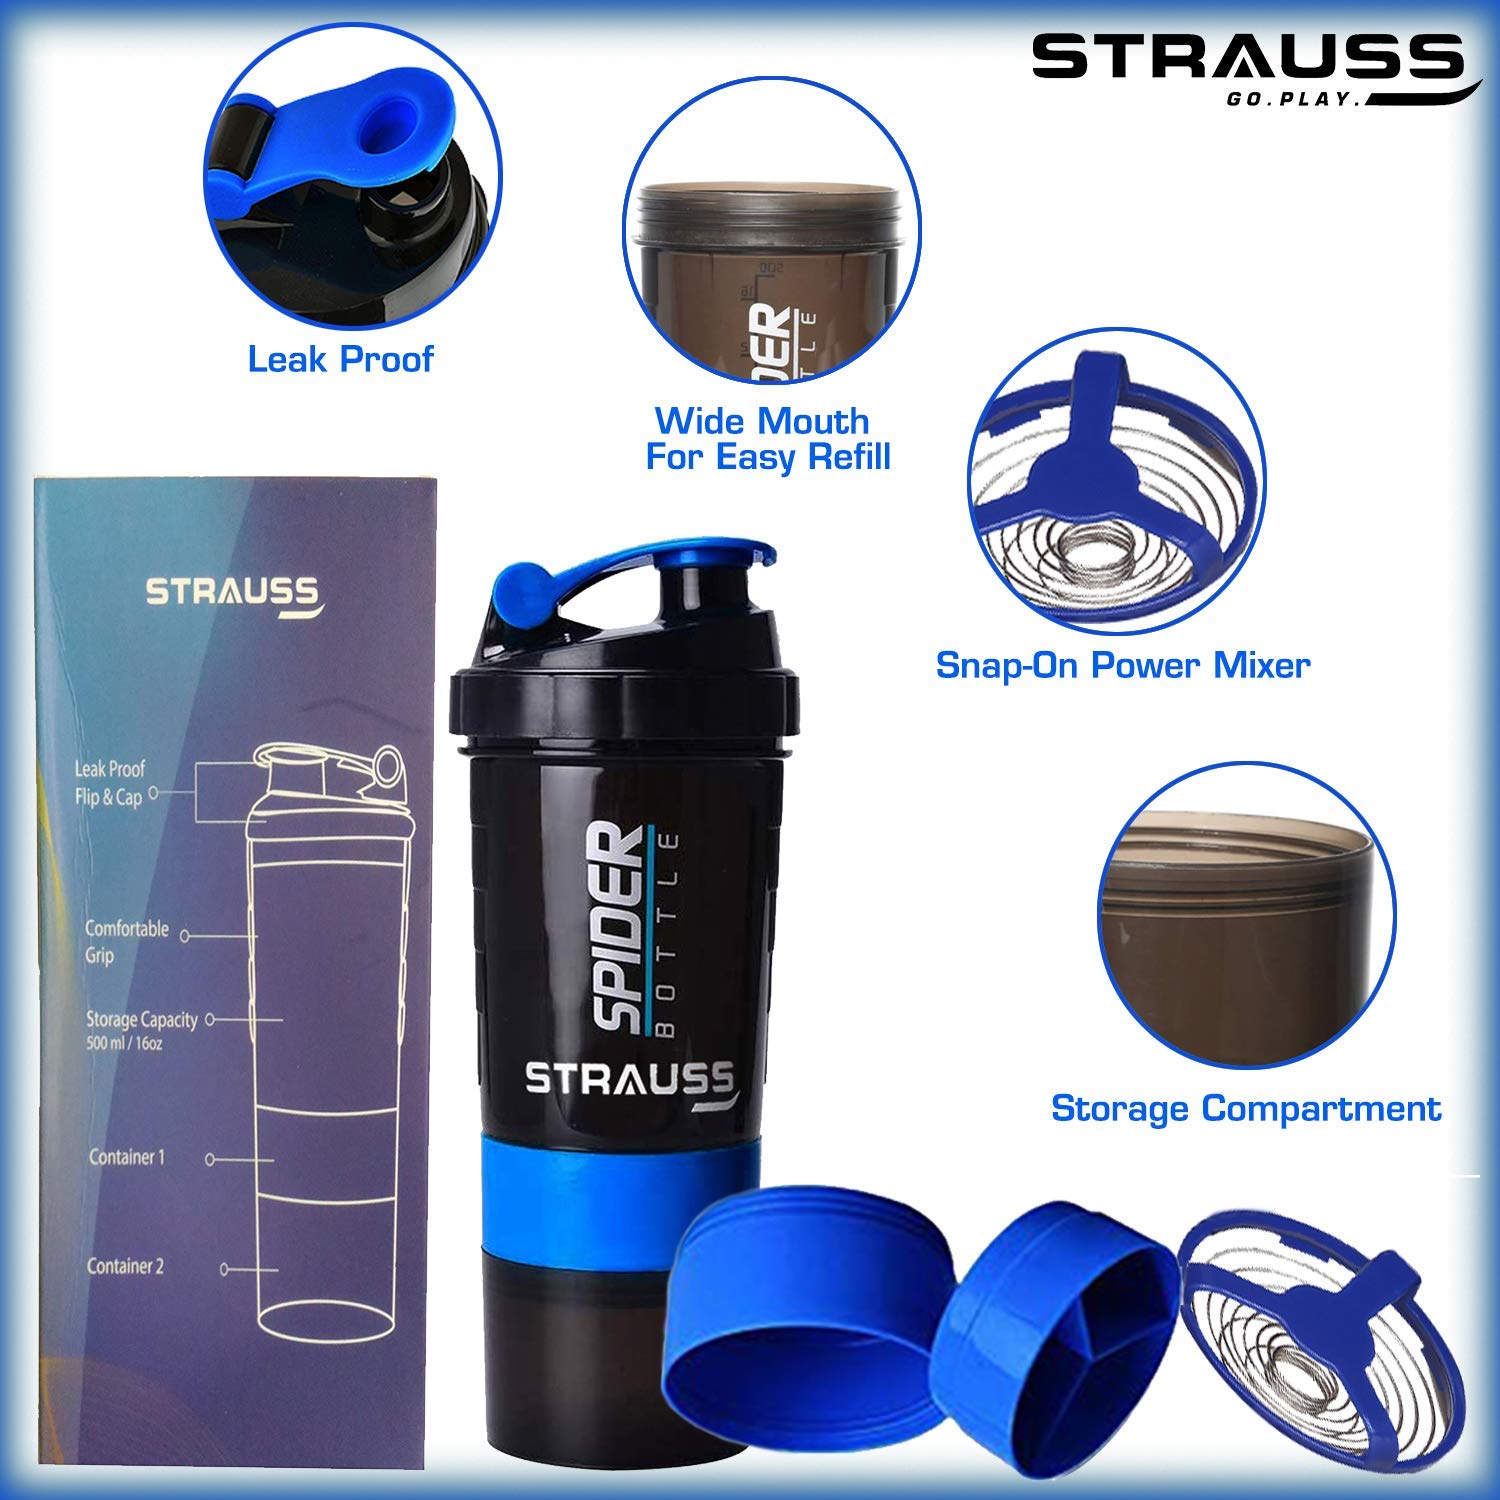 STRAUSS Spider Protein Shaker Bottle | Gym Shaker | Sipper Bottle | Gym Bottle